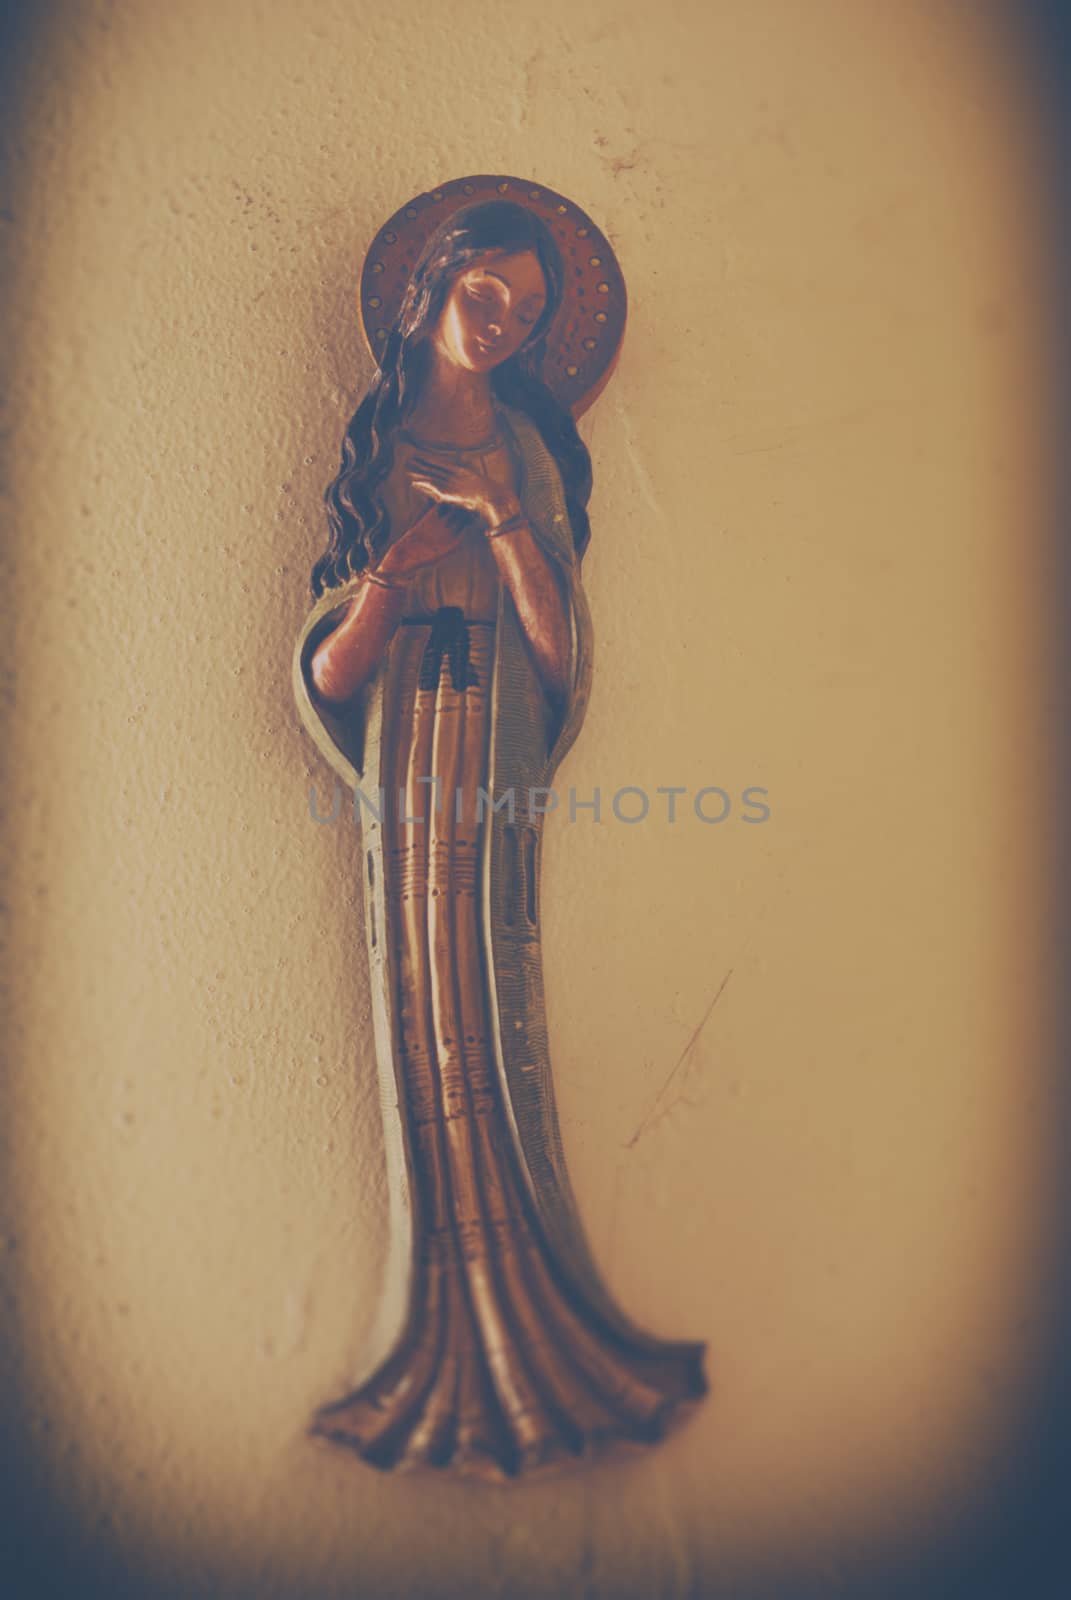 Photograph of a Virgin Mary ceramic figure